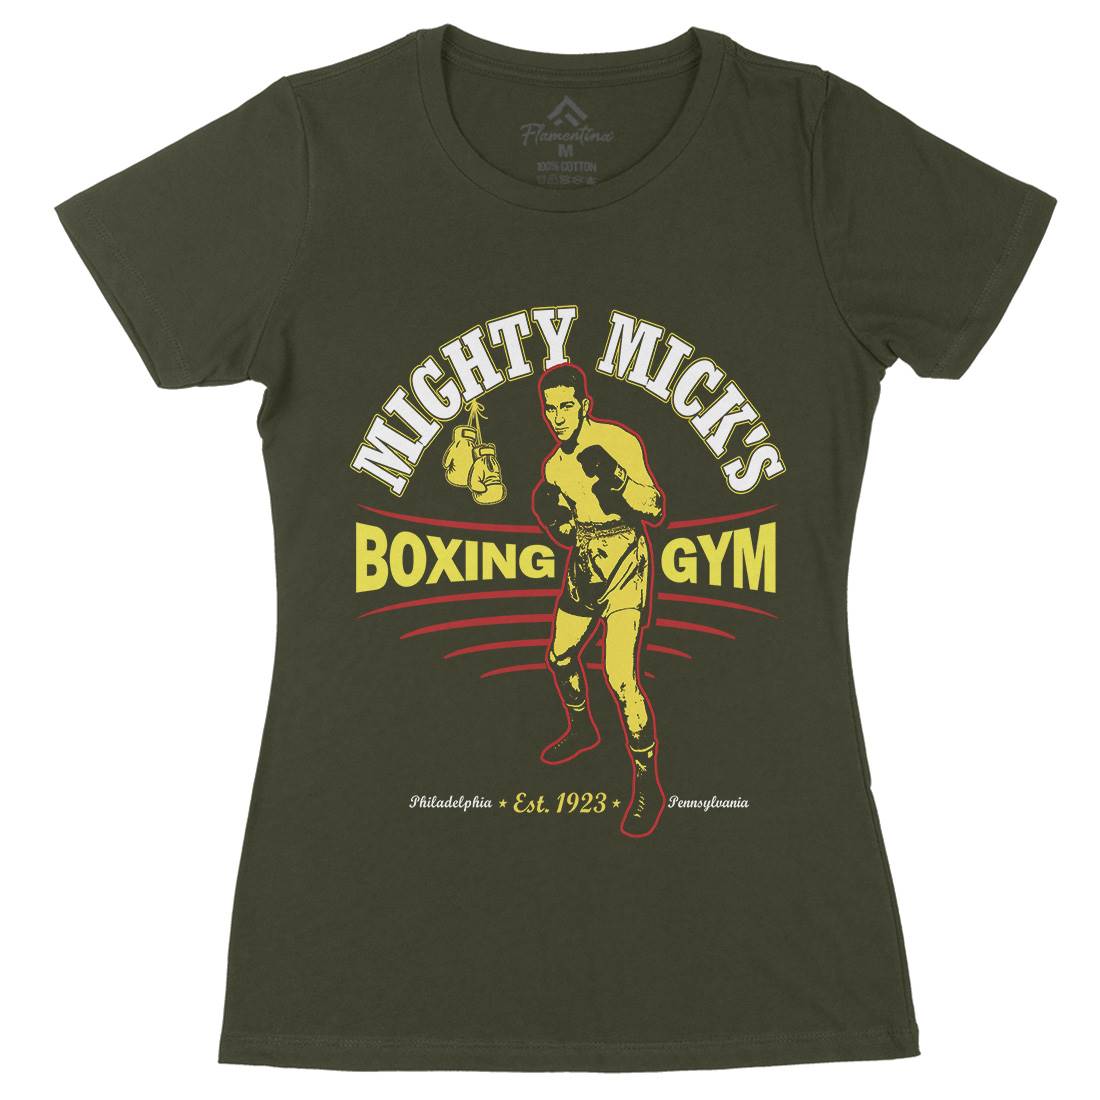 Mighty Micks Gym Womens Organic Crew Neck T-Shirt Sport D276